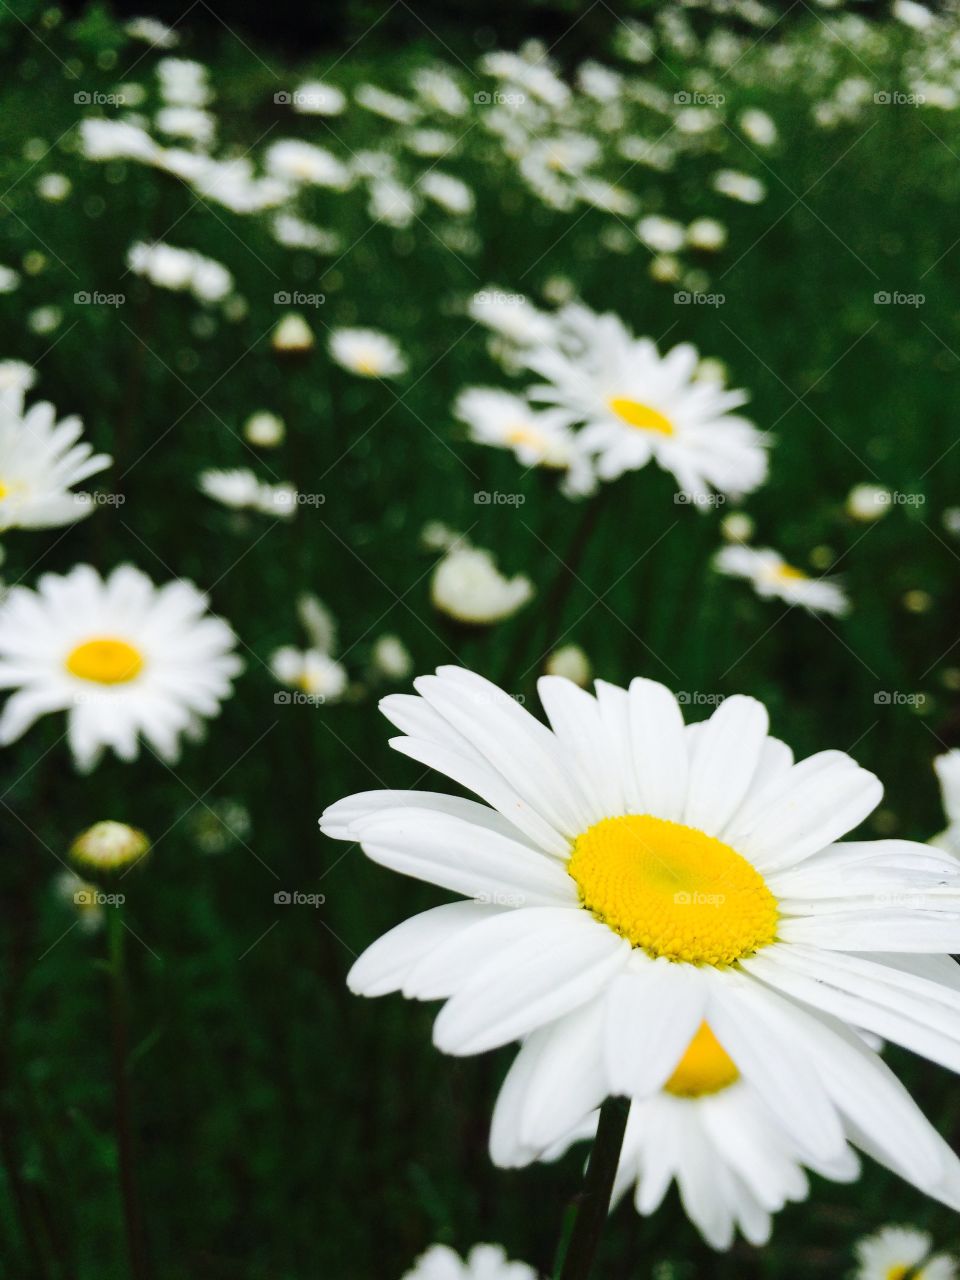 White flowers blooming in field